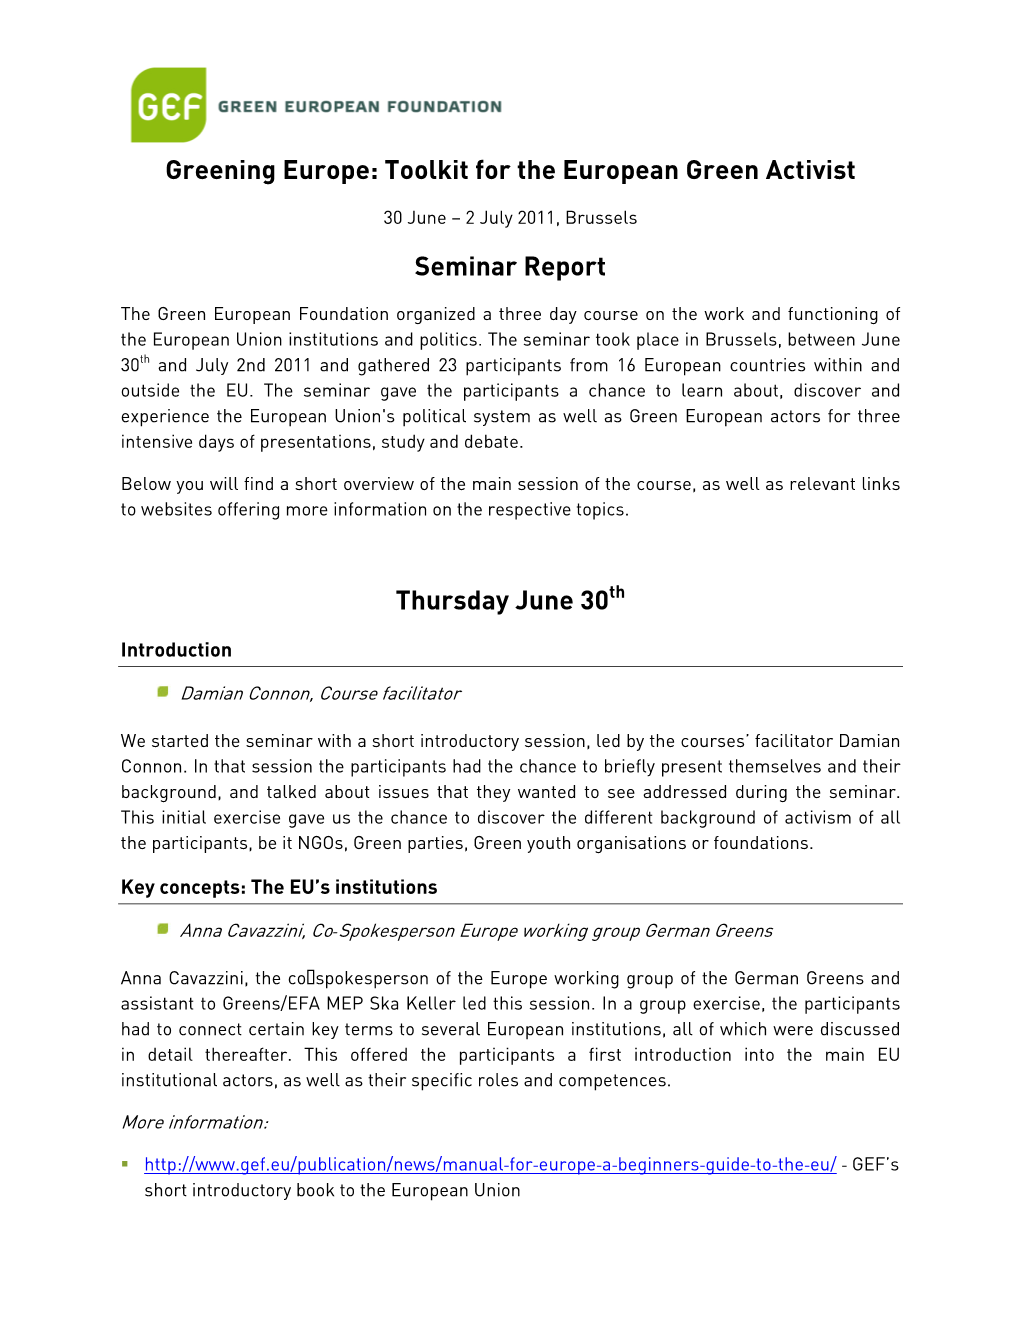 GEF-11-30 Seminar Report Greening Europe